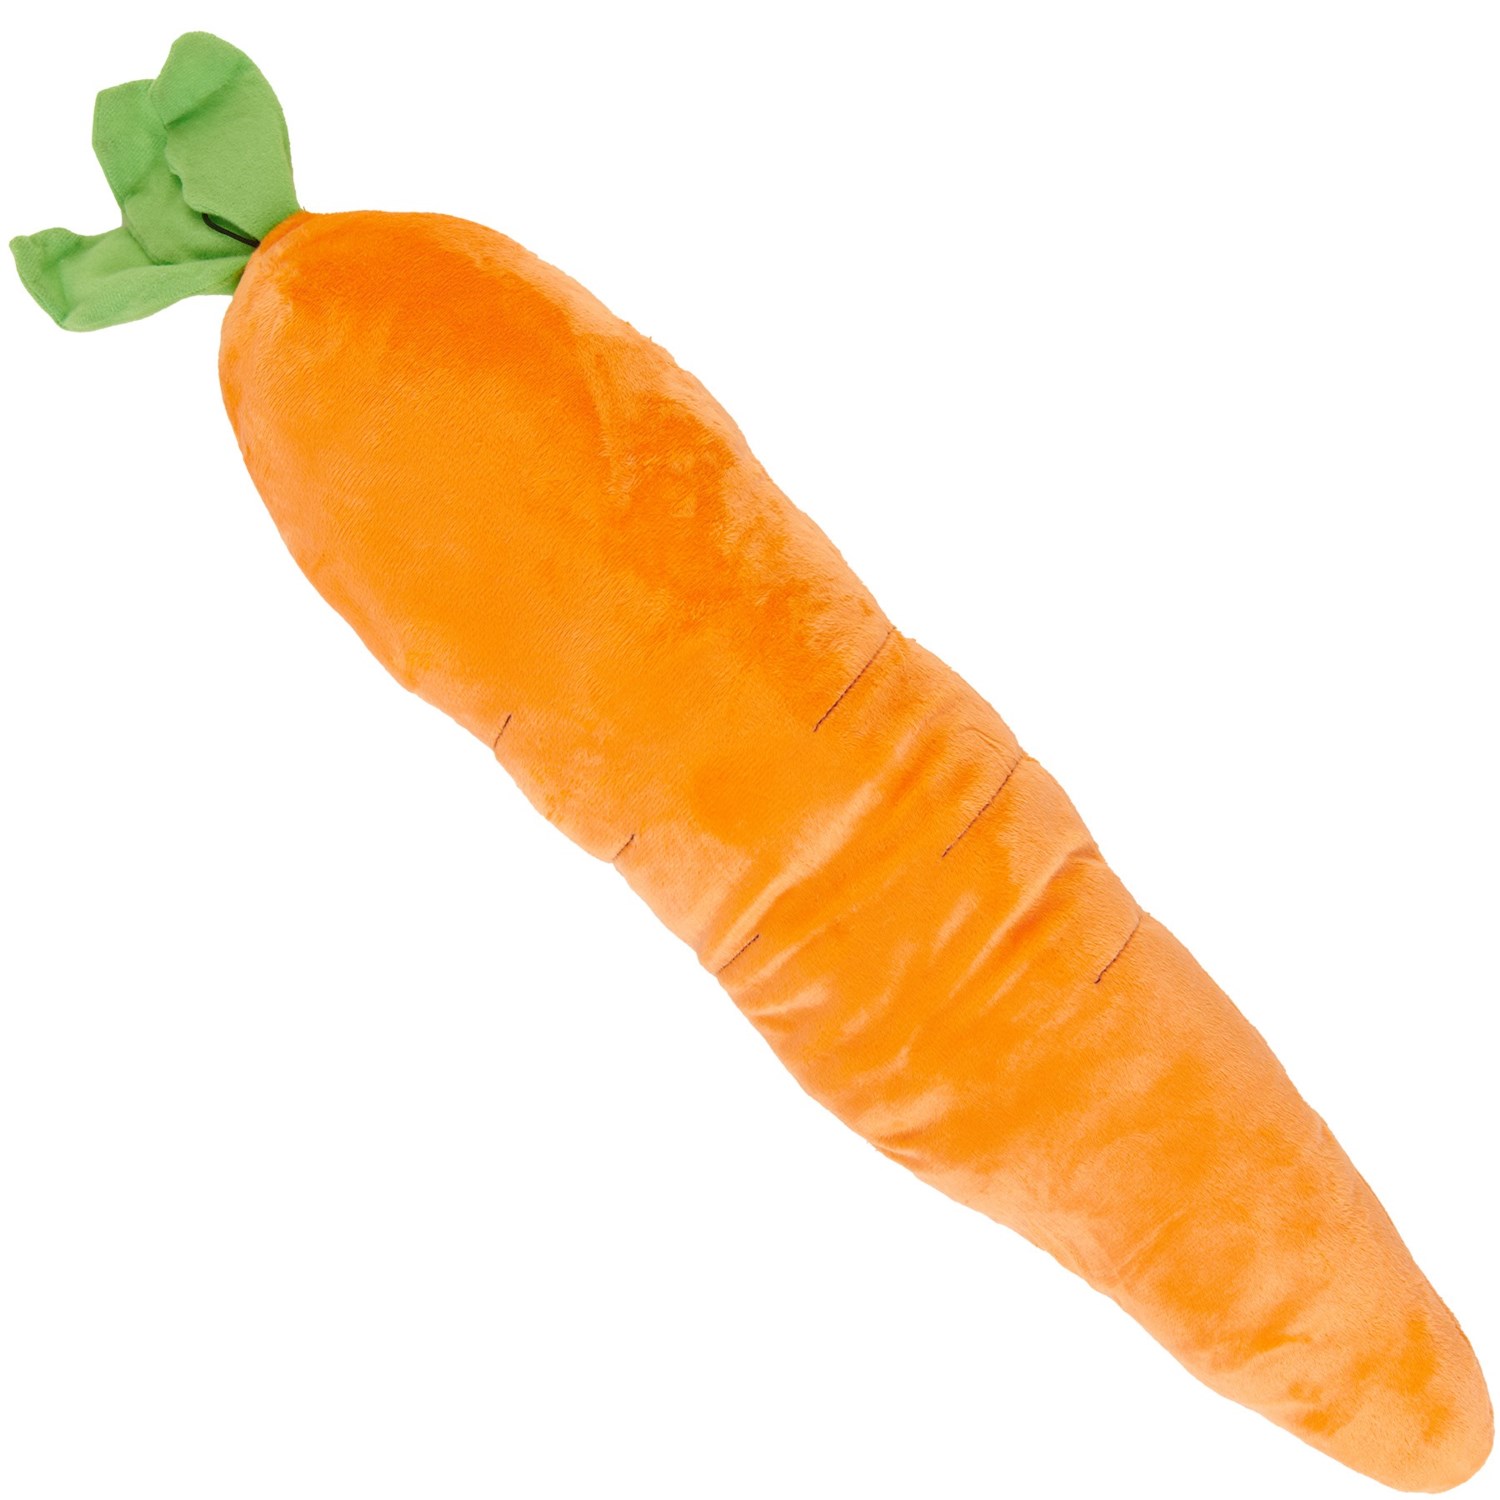 Petlou Carrot Plush Toy - 29”, Squeaker